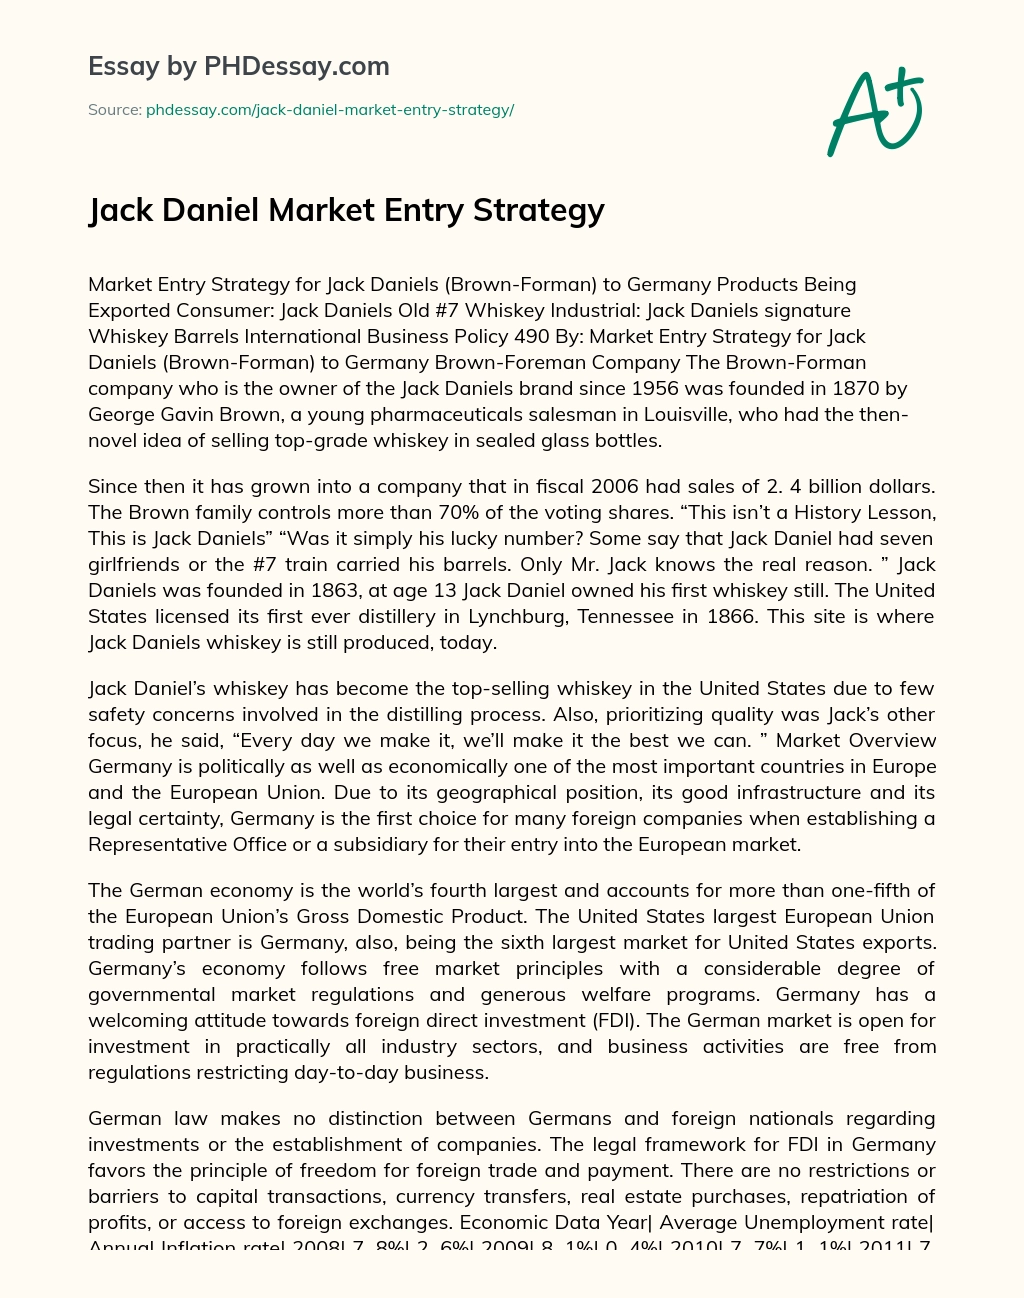 Jack Daniel Market Entry Strategy essay